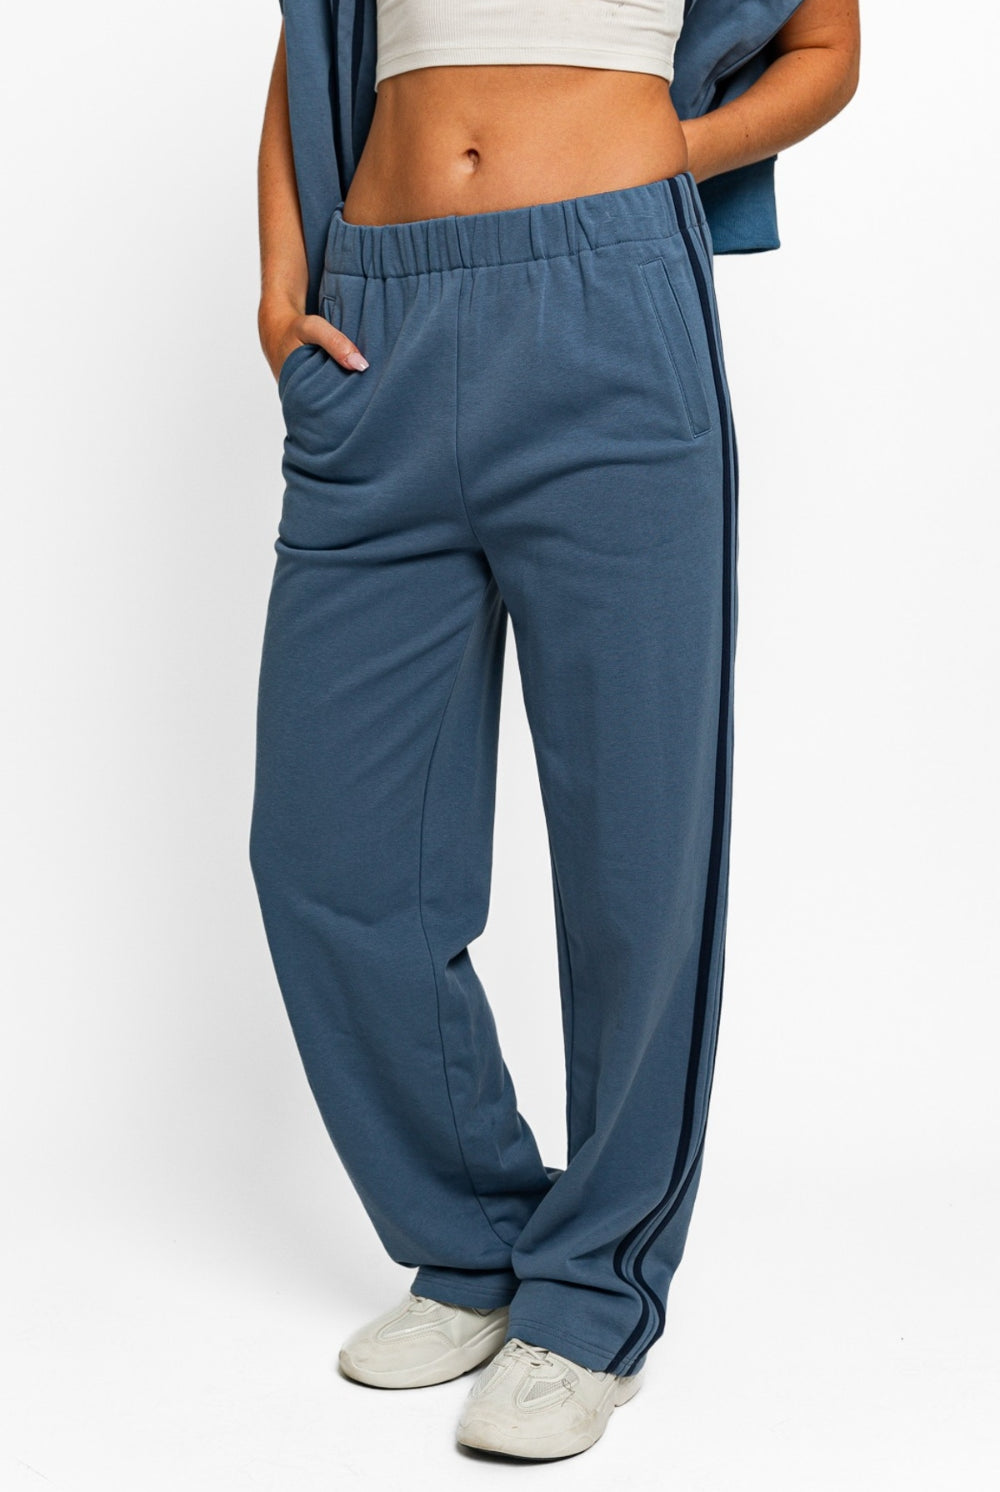 Model showcasing GemThreads Boutique's Side-Stripe Cozy Sweatpants in blue.